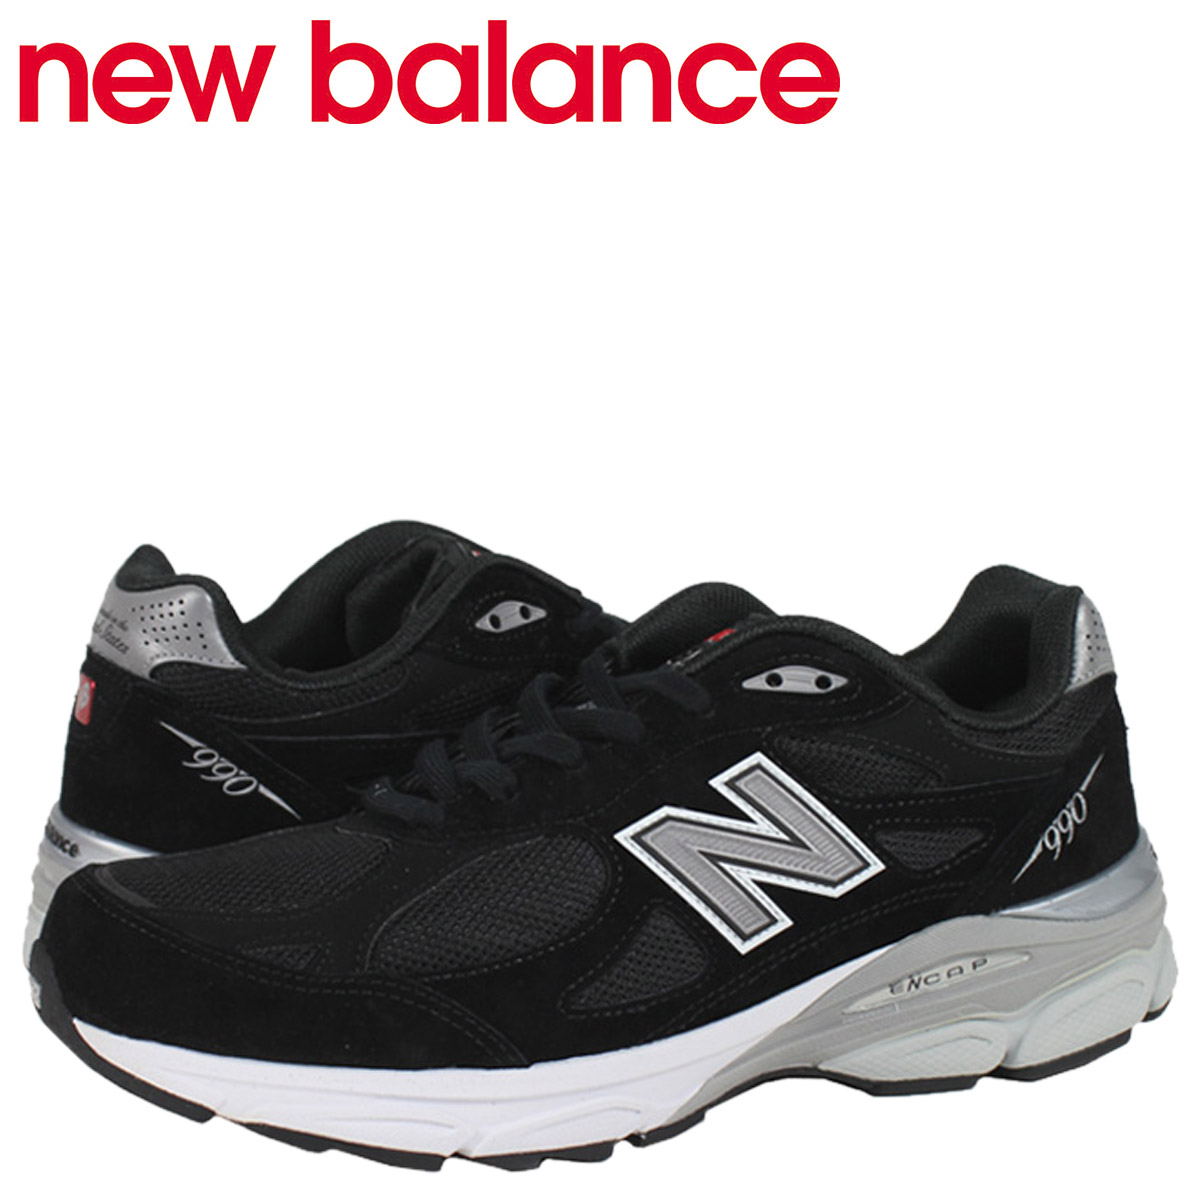 New Balance new balance 990 M990 BK3 